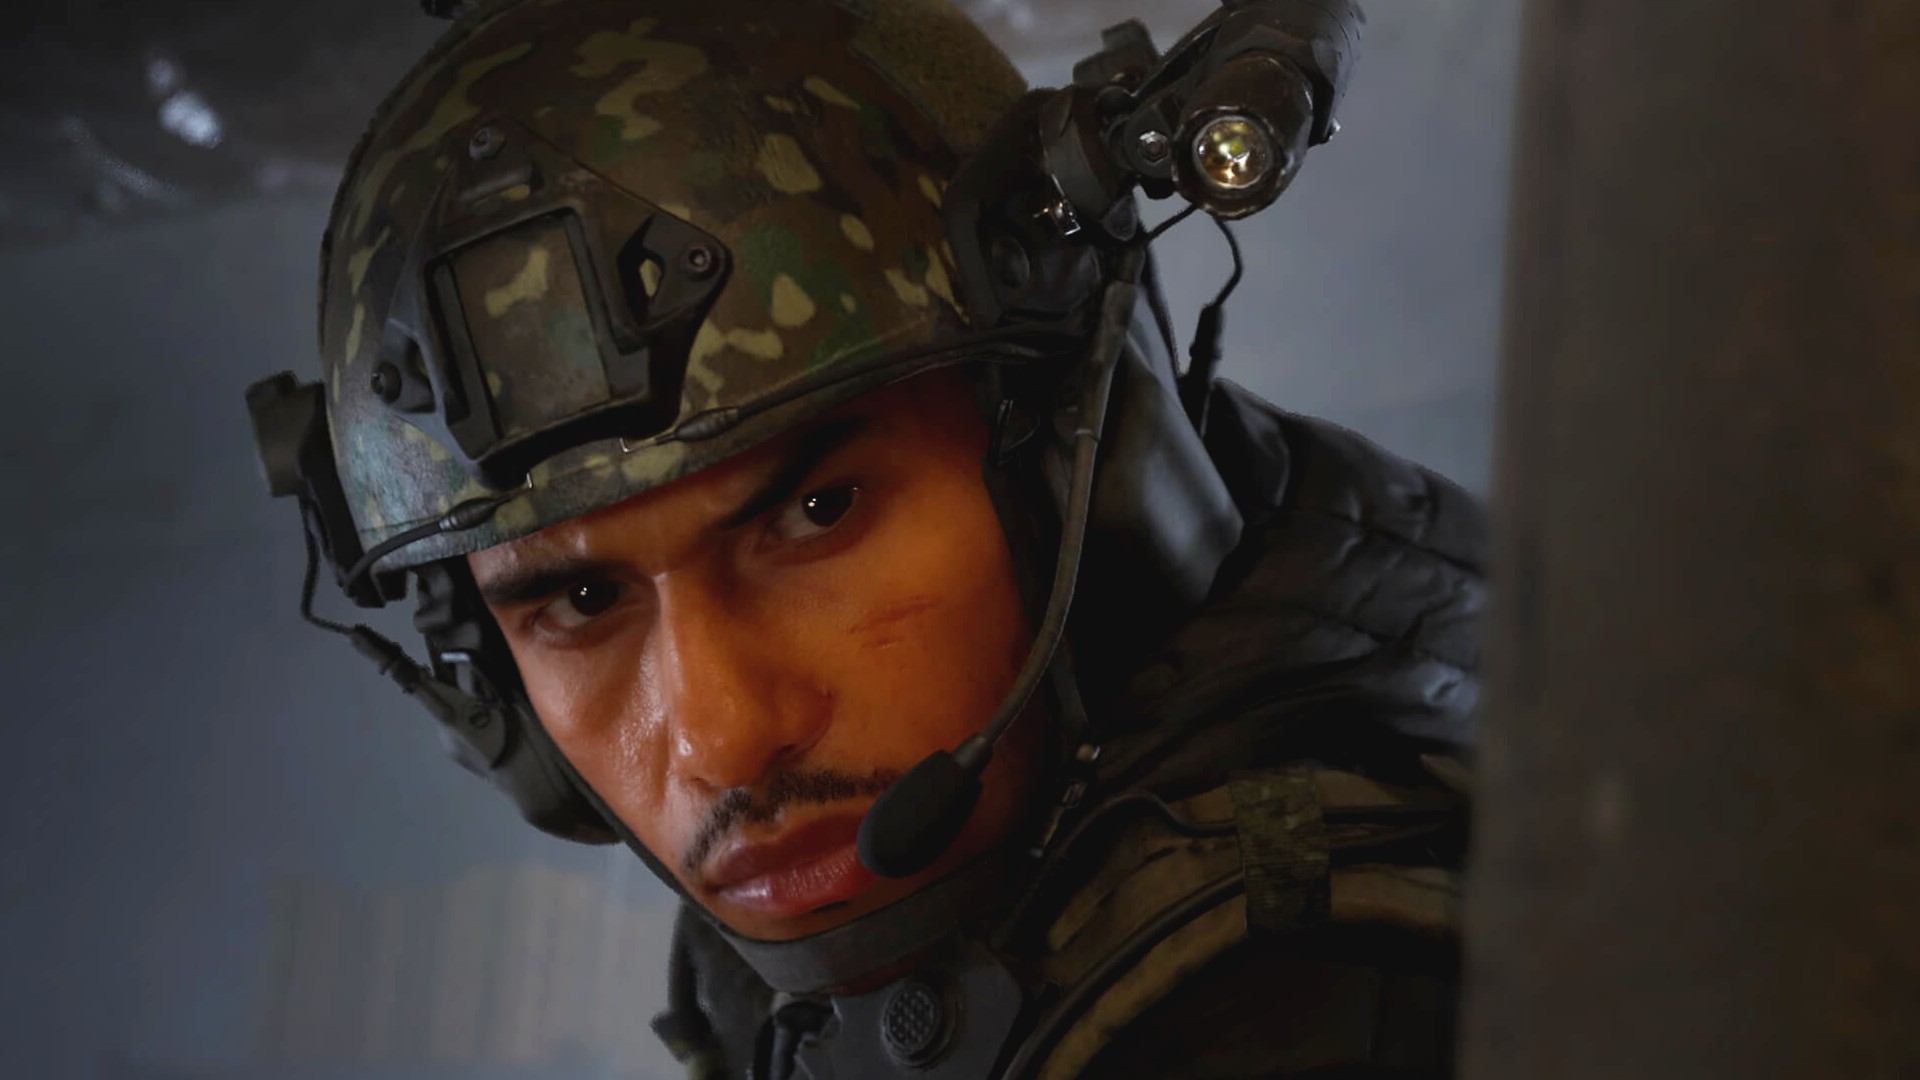 Campaign Trailer  Call of Duty: Modern Warfare III 